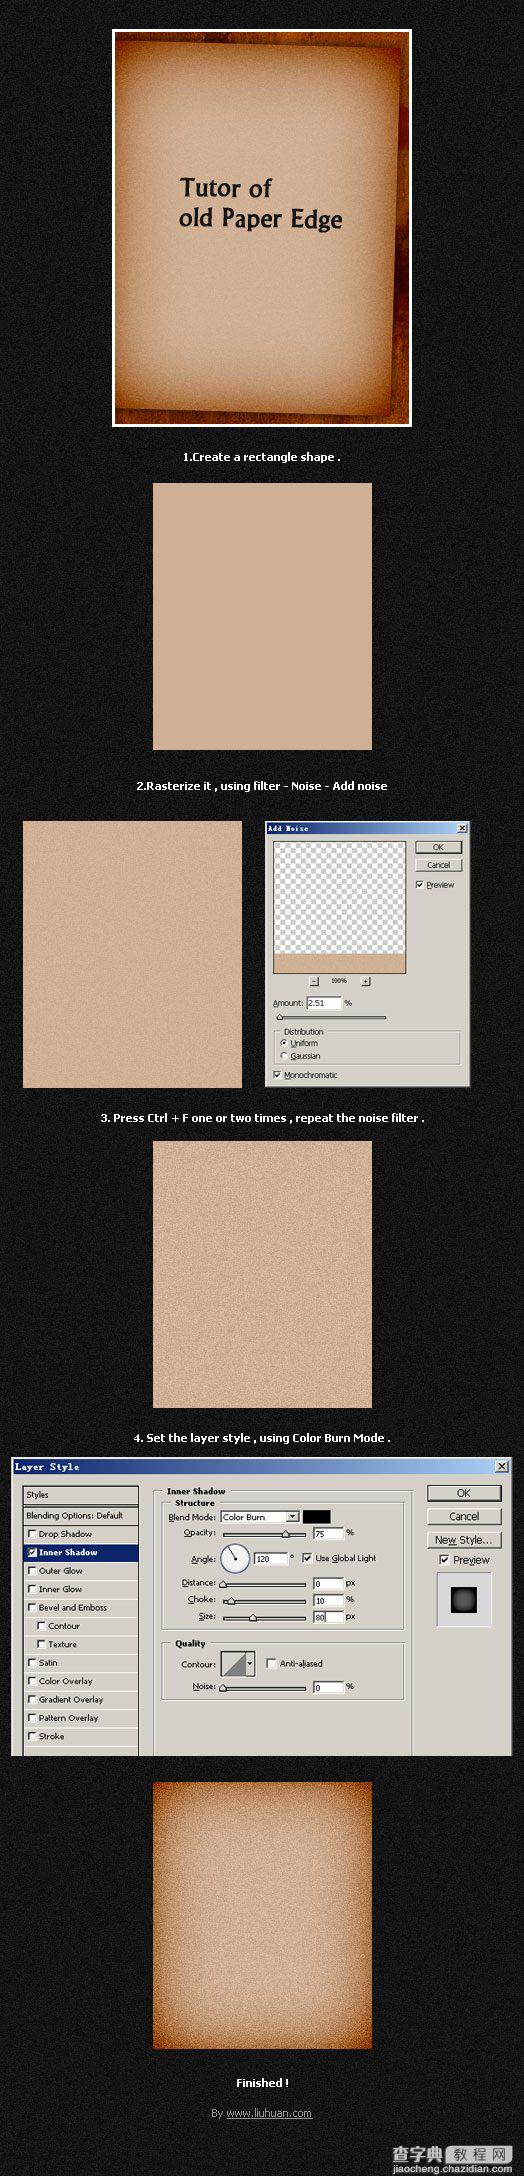 Photoshop入门教程:简单制作旧纸片1